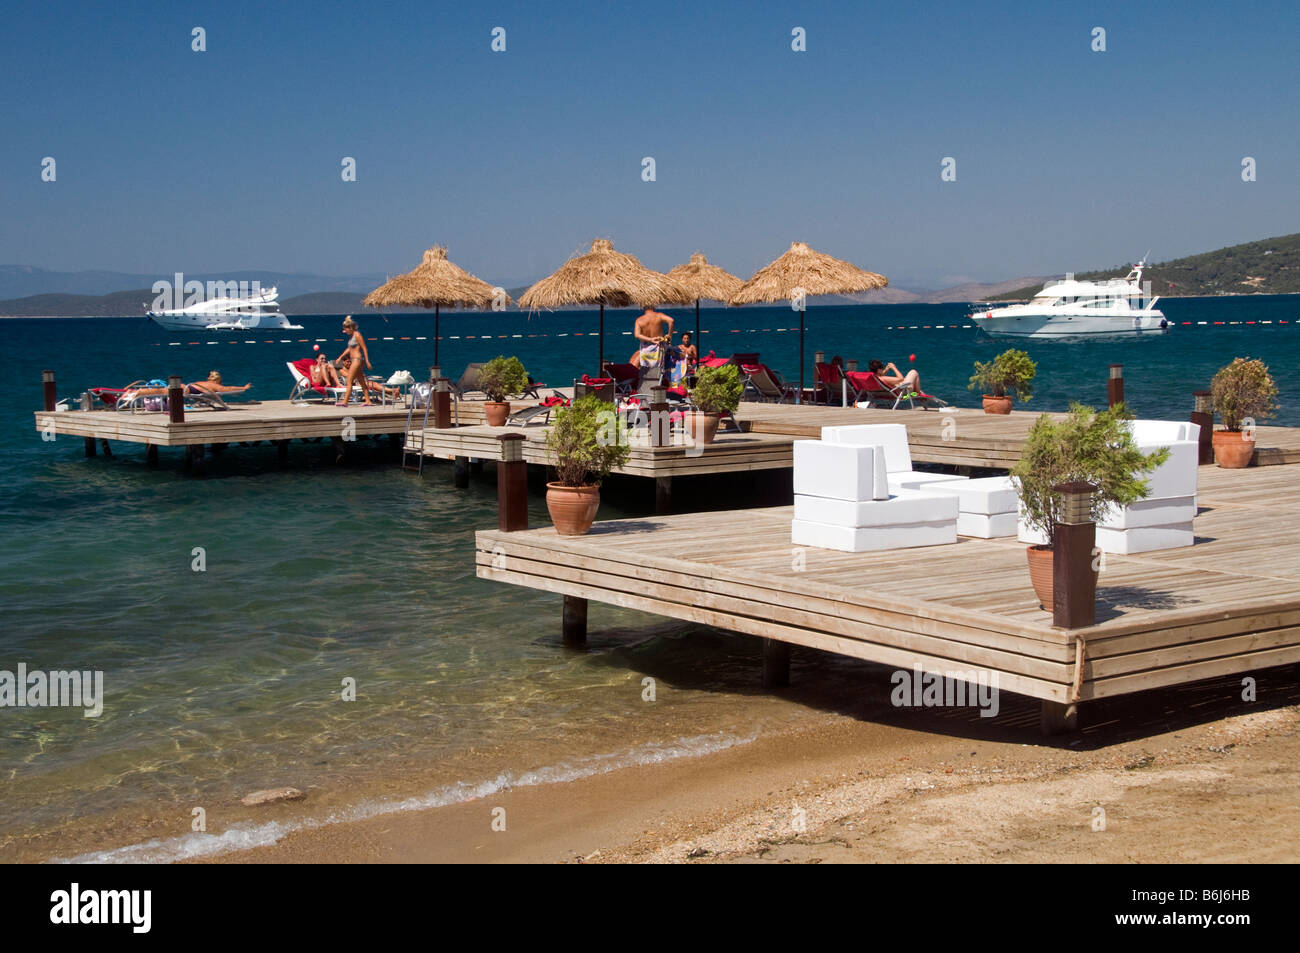 Turkbuku beach clubs, Bodrum Turkey. Stock Photo